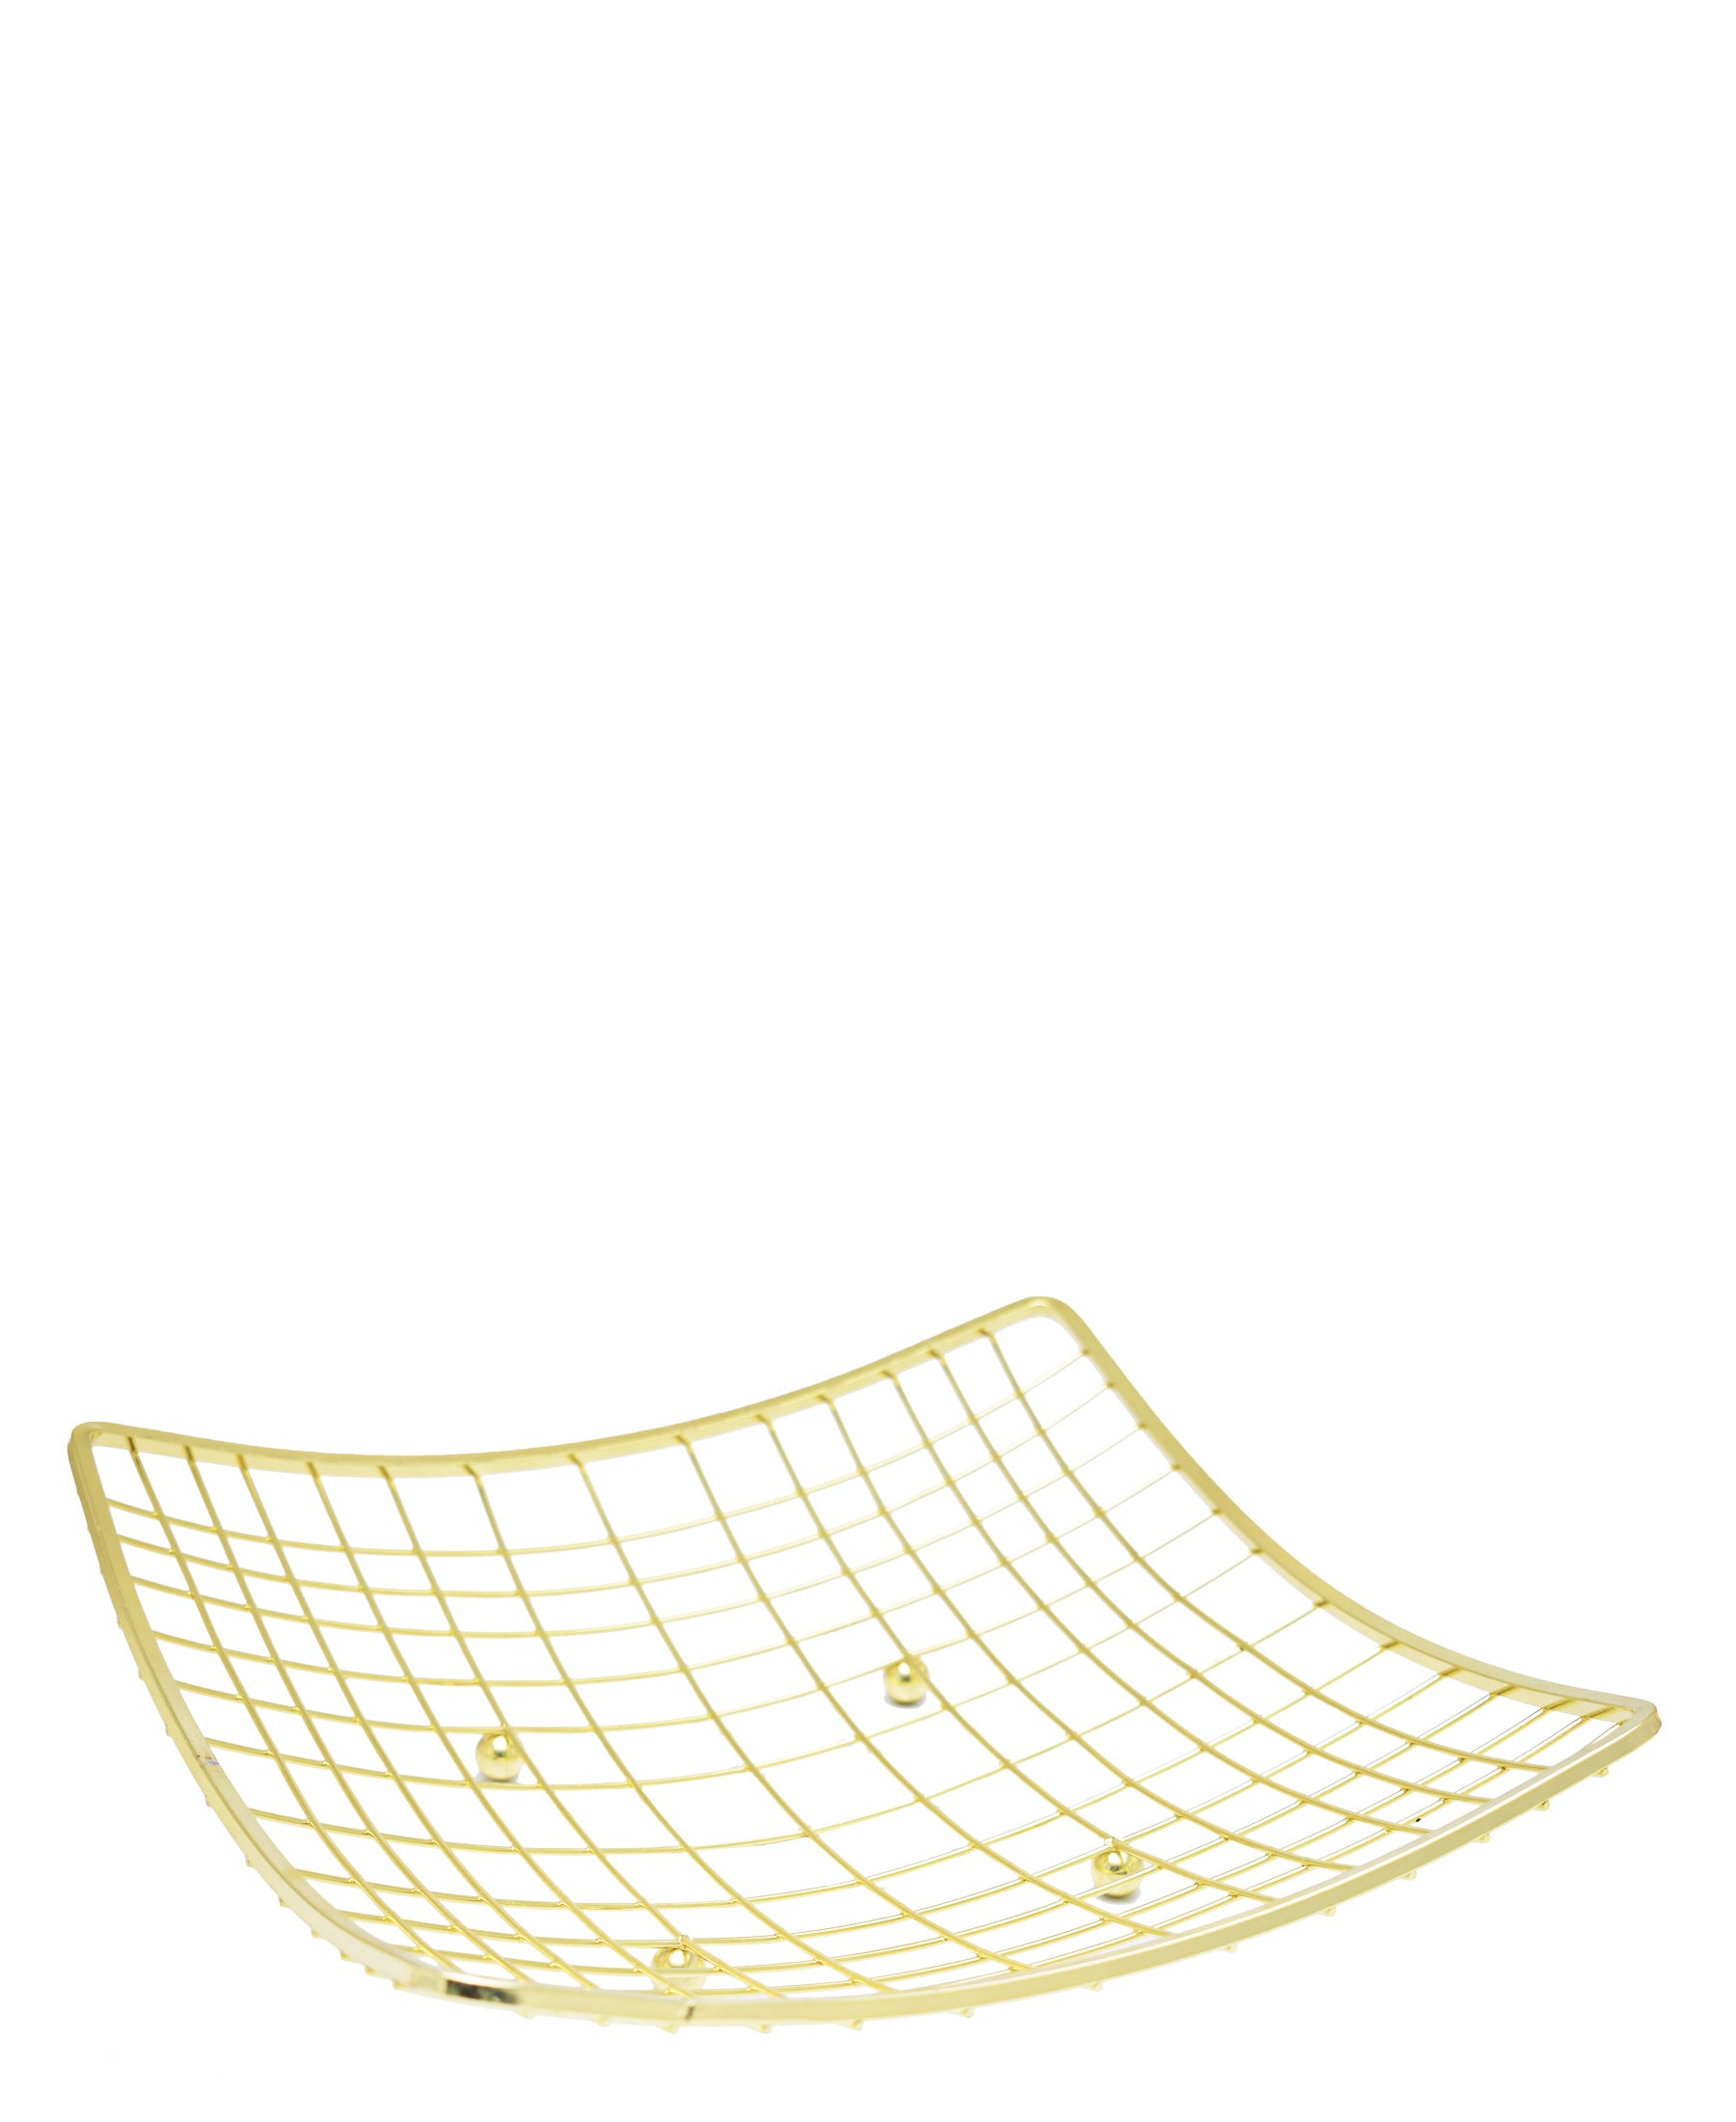 Urban Decor 28cm Fruit Basket - Gold